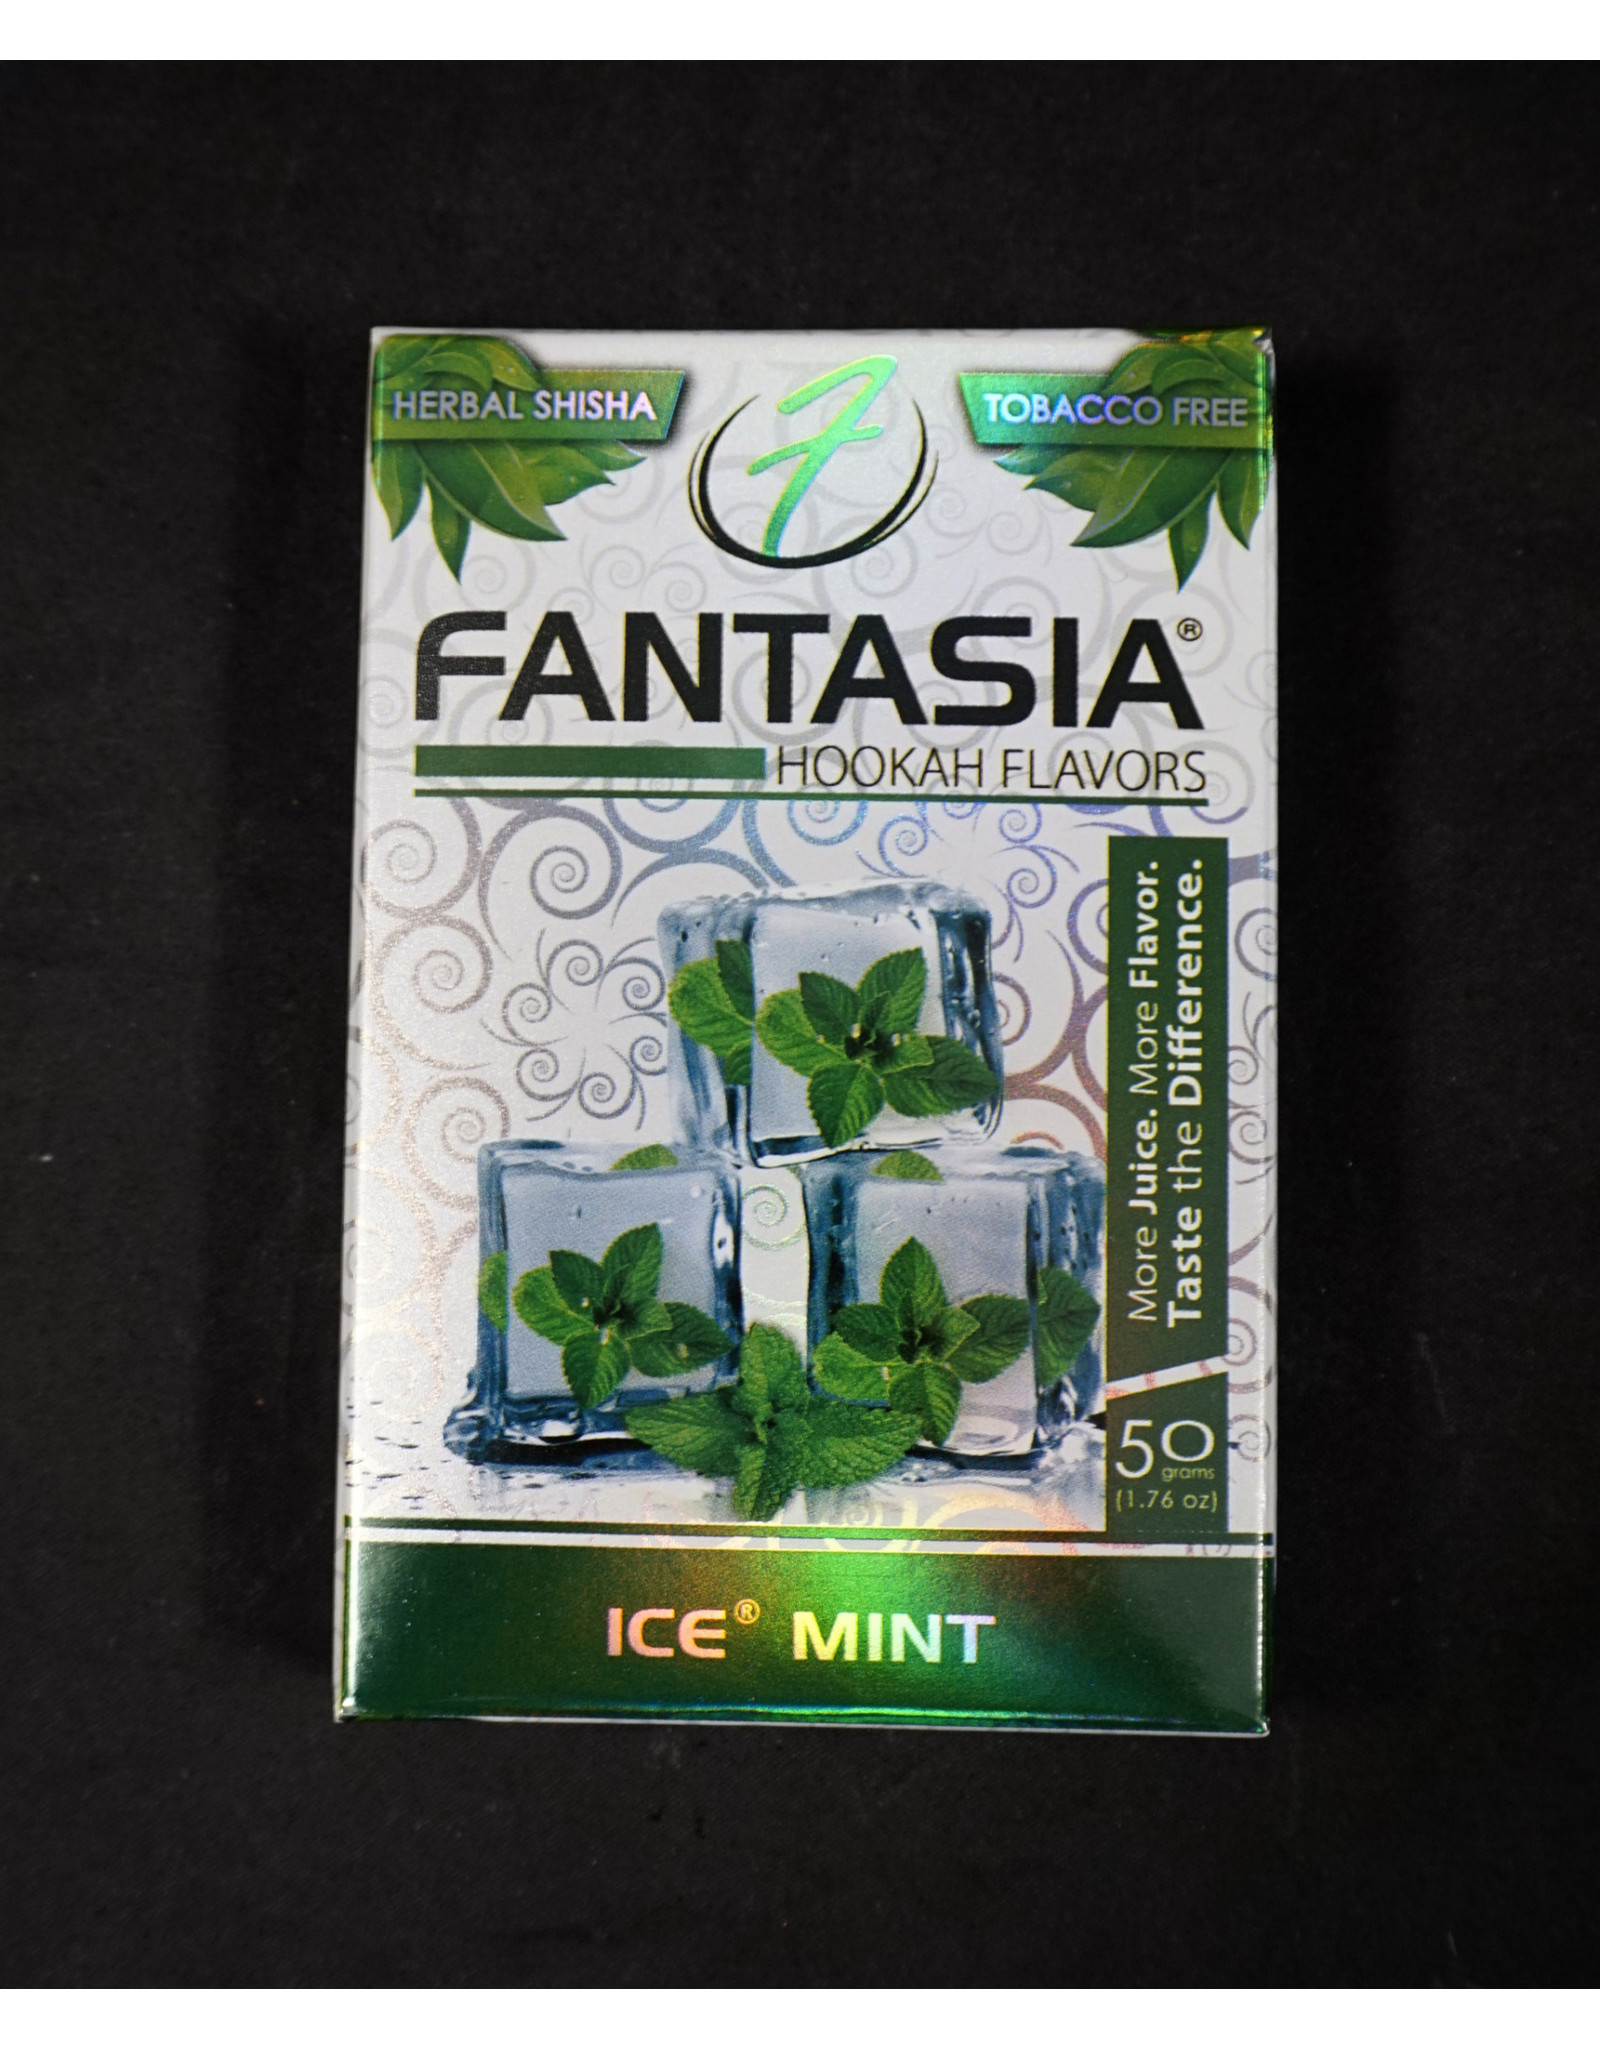 Fantasia Fantasia Herbal Shisha - Ice Mint